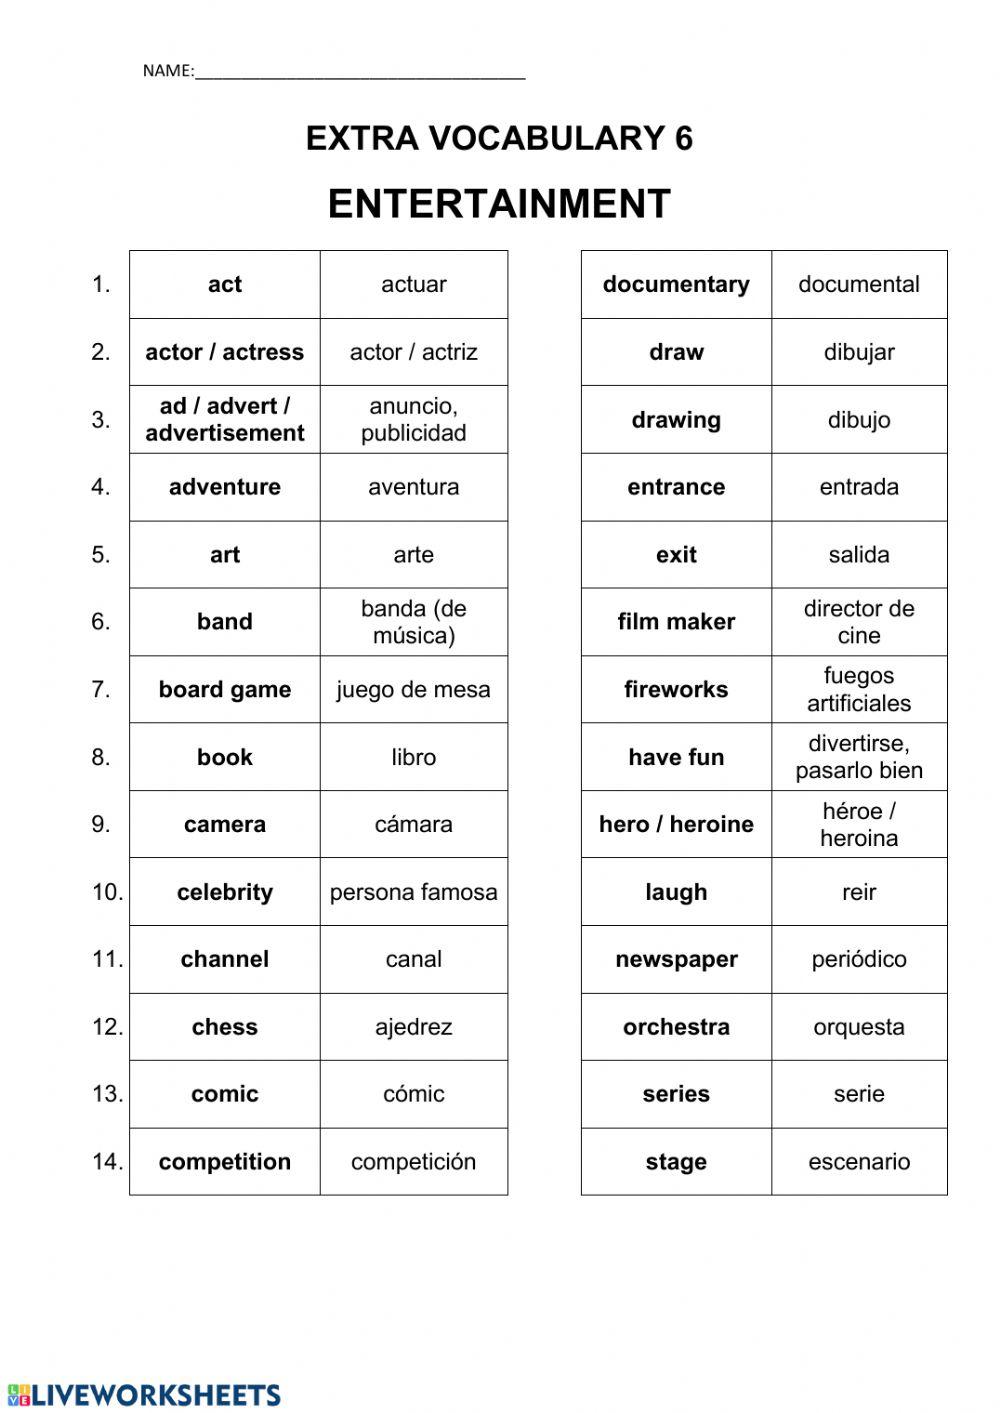 Extra vocabulary 6 - Entertainment